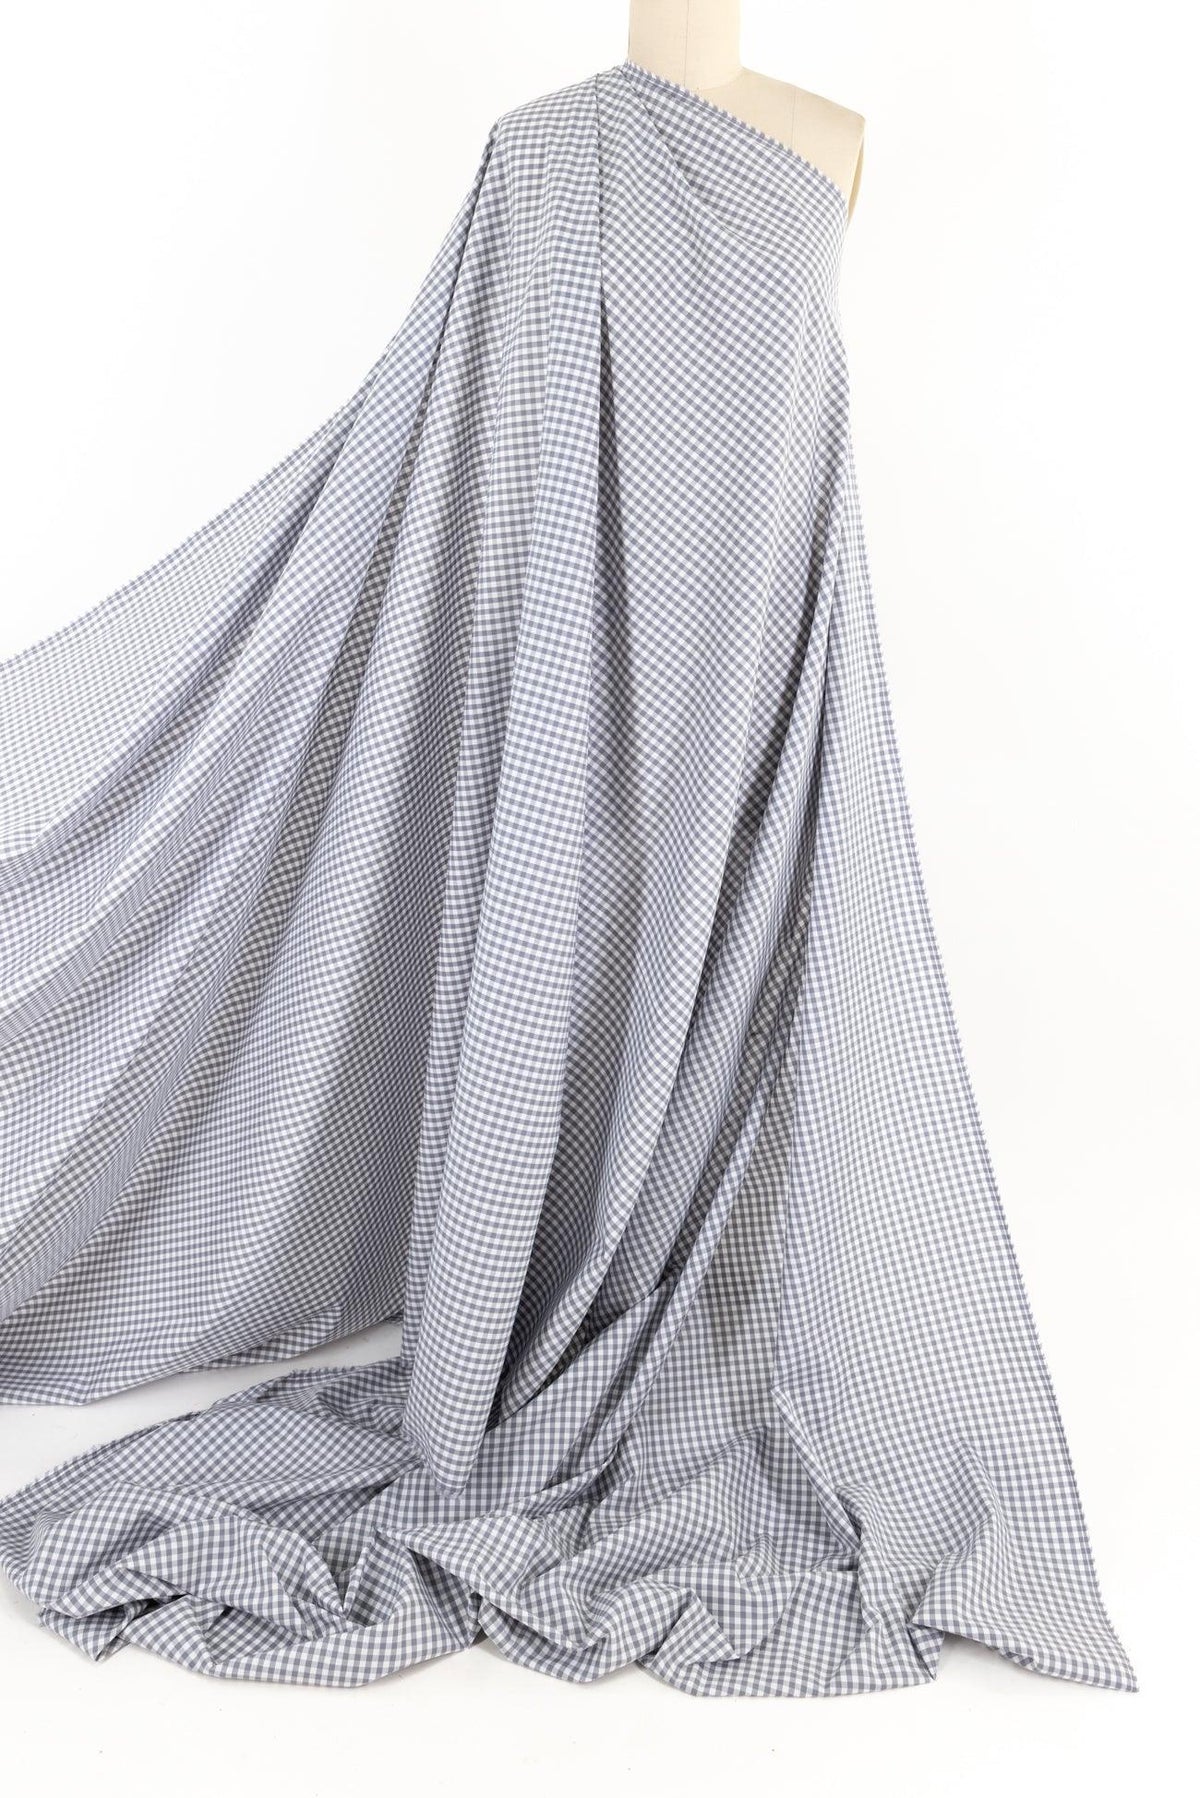 Gray Sky Gingham Check Japanese Cotton Woven - Marcy Tilton Fabrics